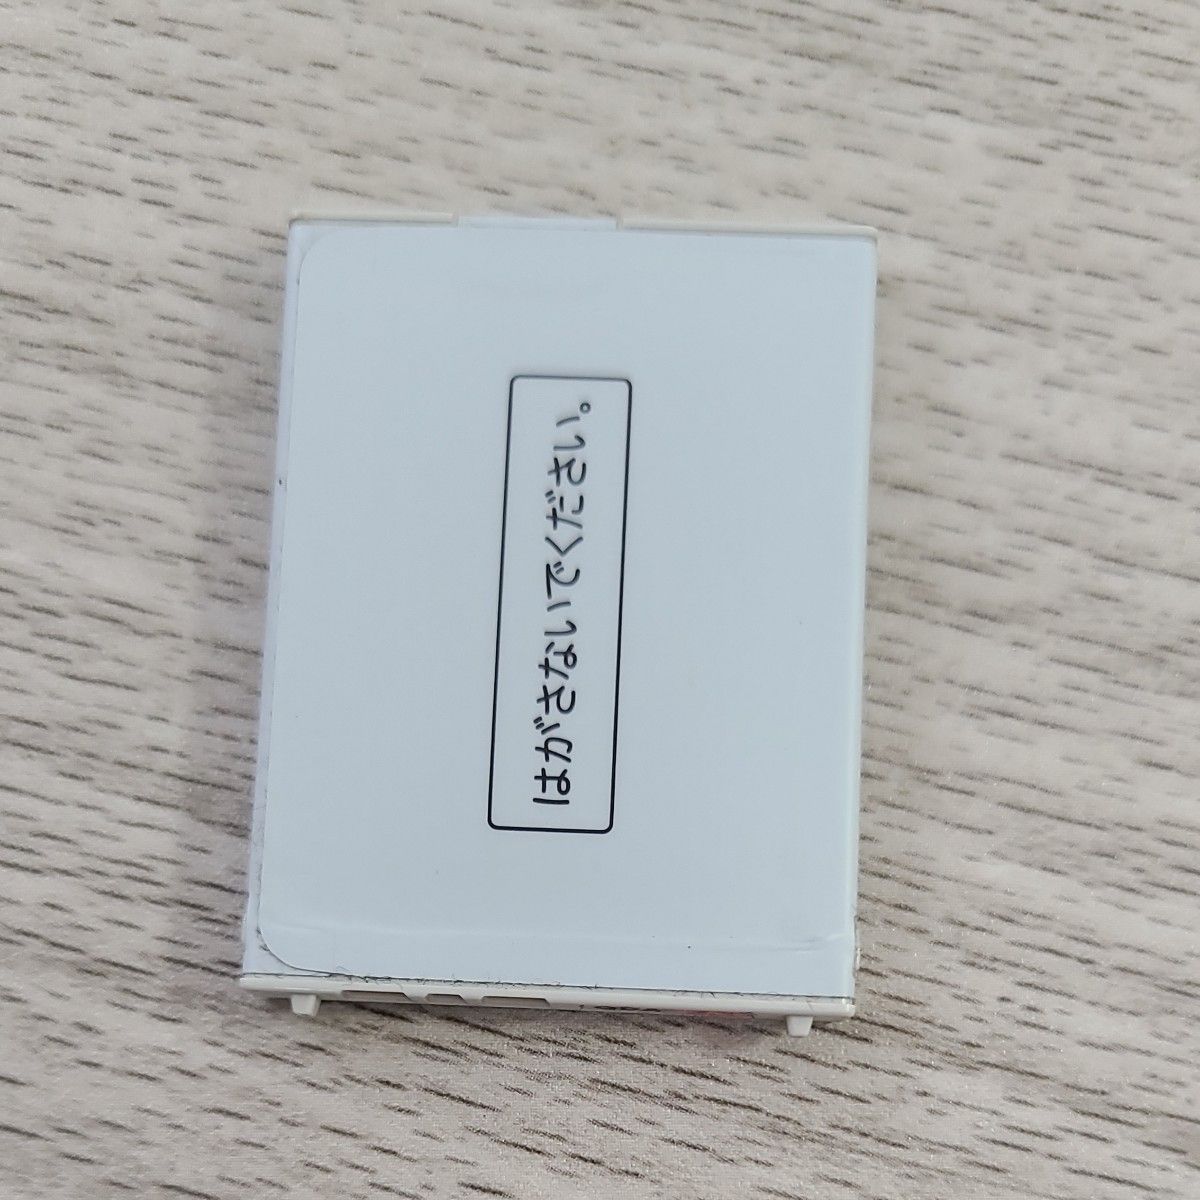 NTTドコモ　SH10　純正電池パックバッテリー　 シャープ ドコモ　充電確認済み